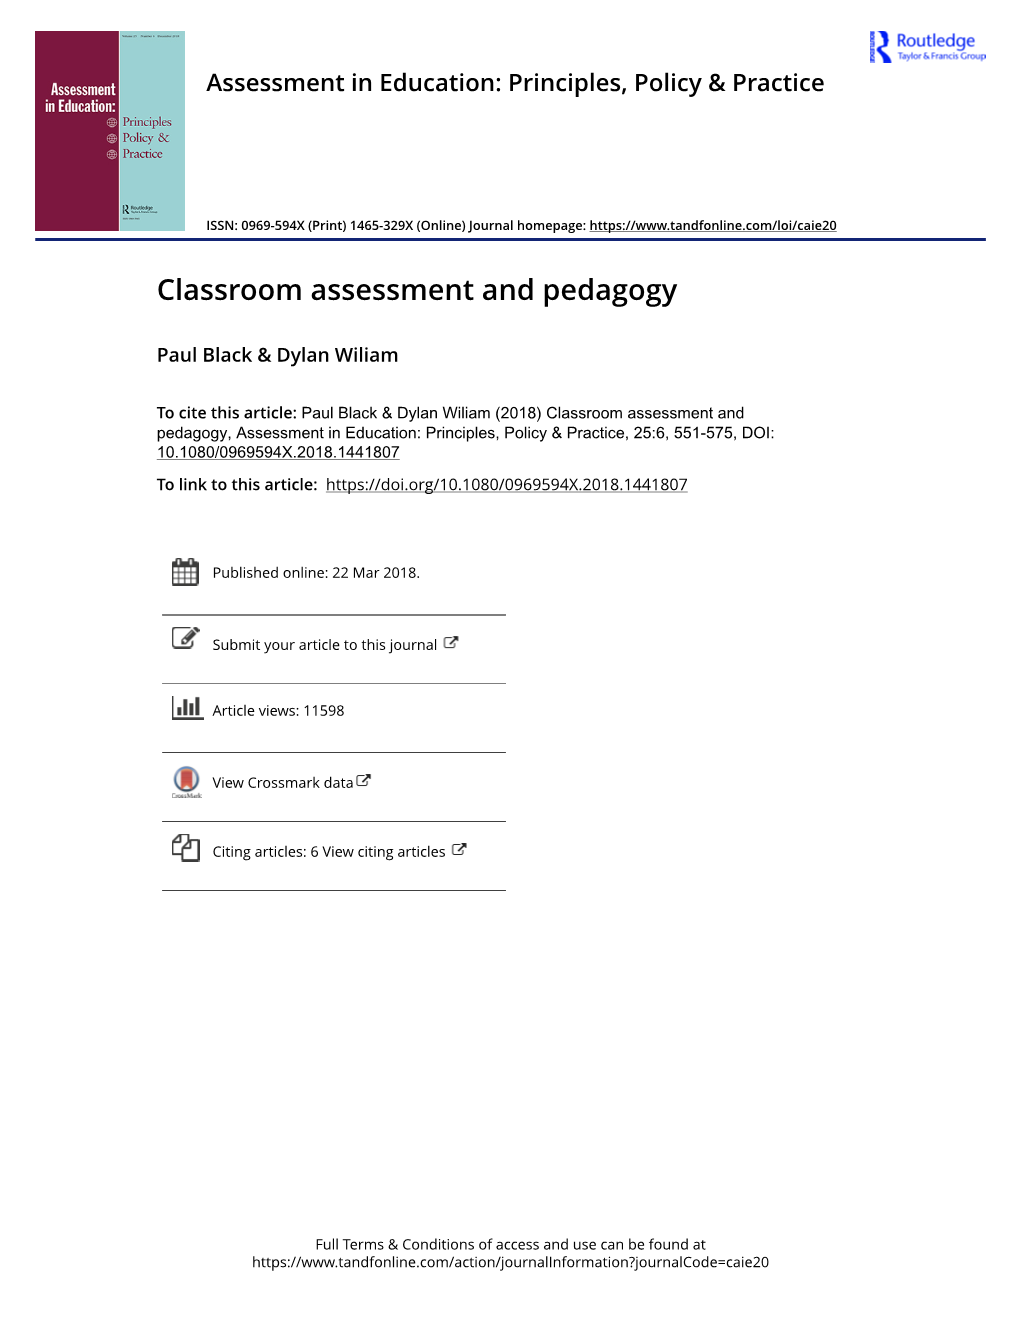 Classroom Assessment and Pedagogy